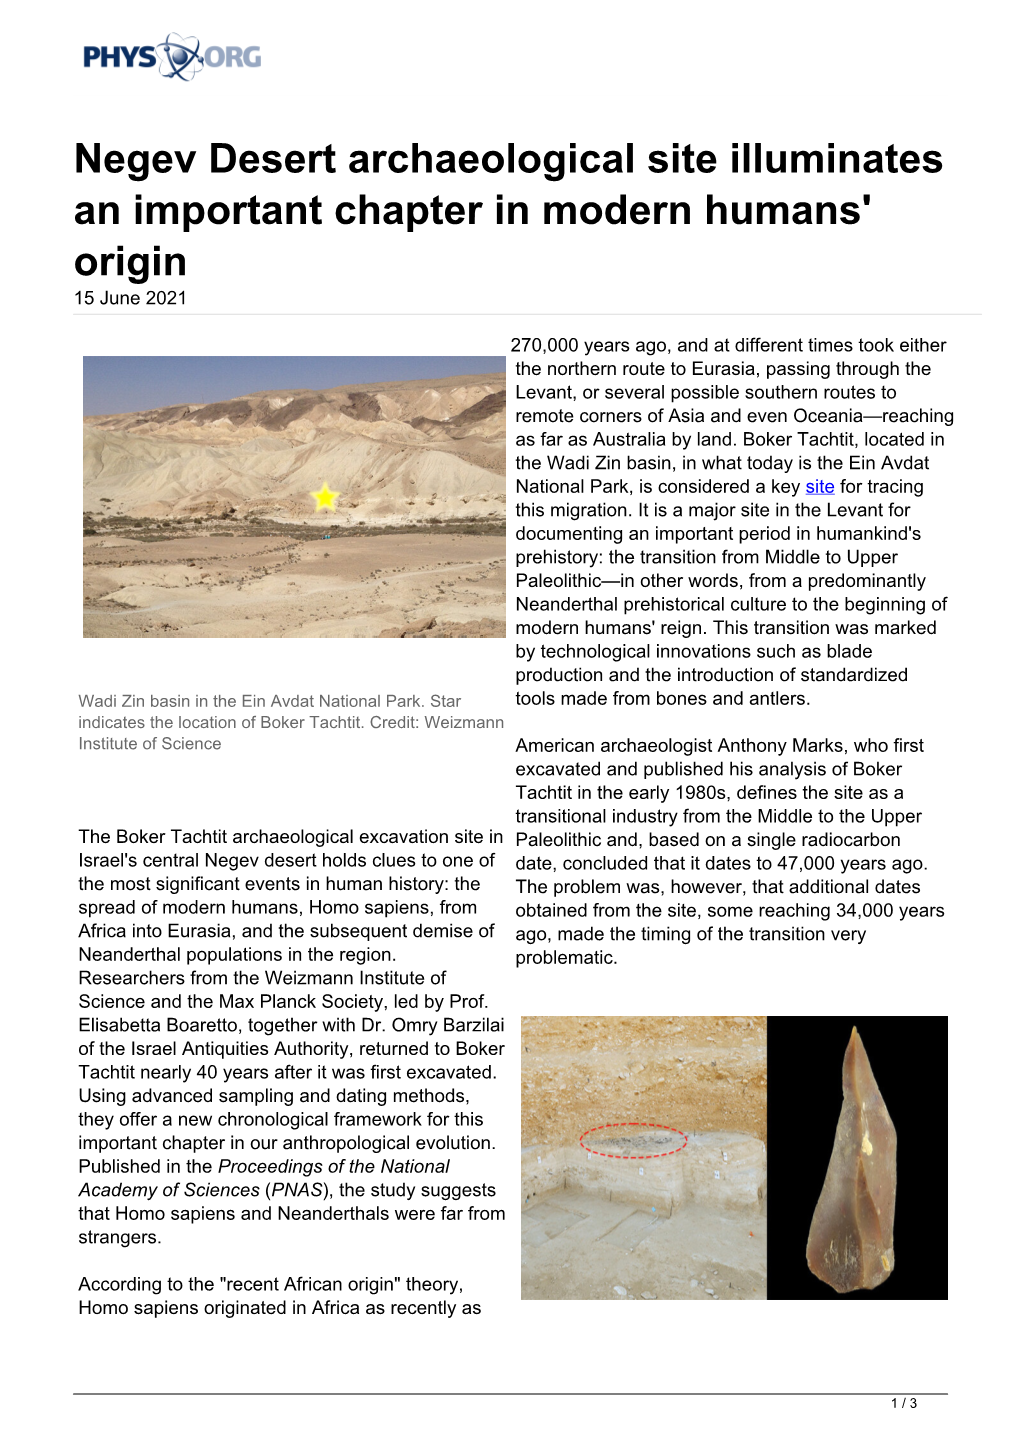 Negev Desert Archaeological Site Illuminates an Important Chapter in Modern Humans' Origin 15 June 2021